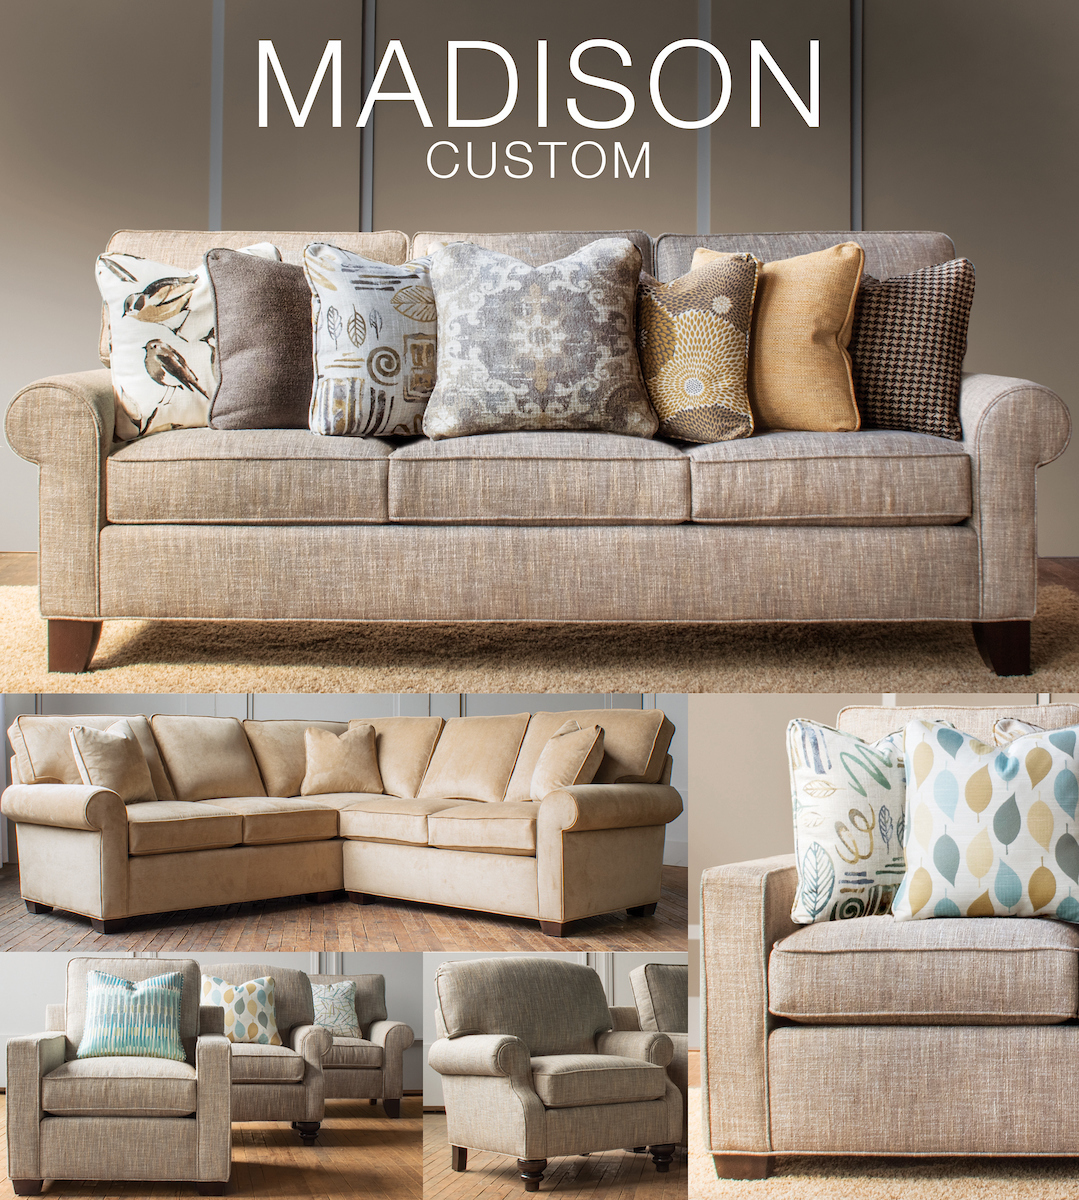   Hallagan Furniture Madison Custom Design